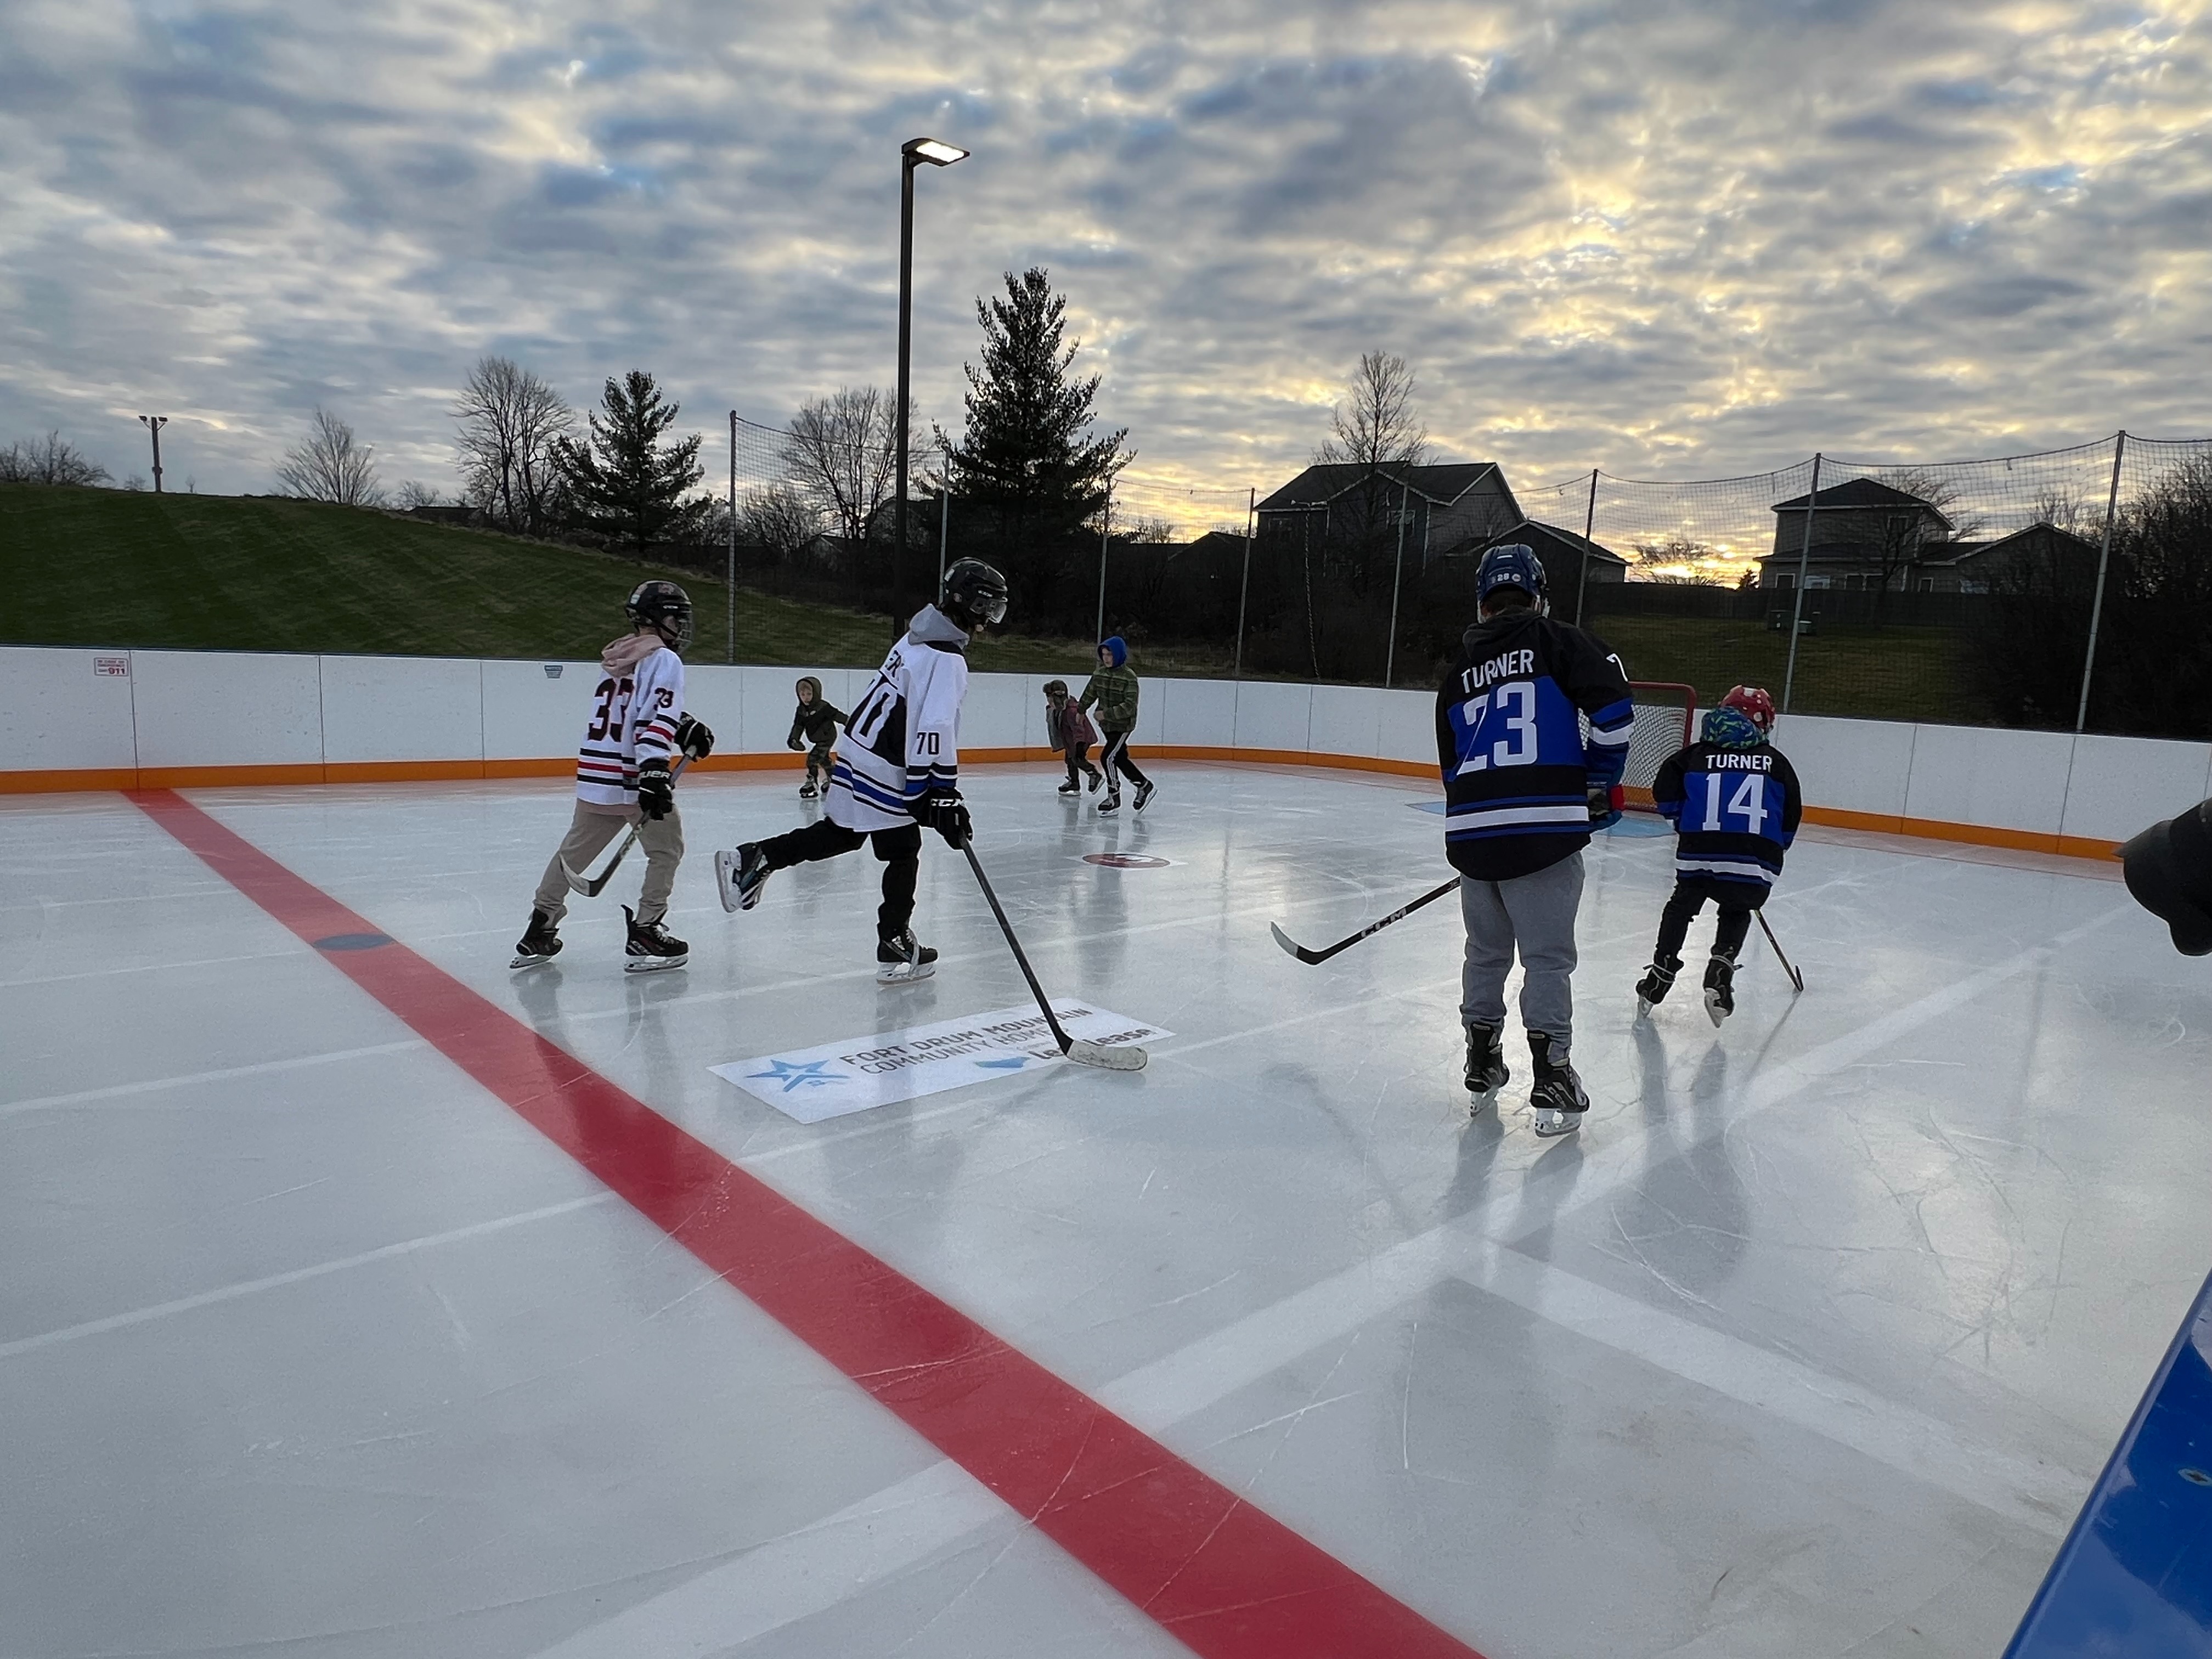 Ice skating rink